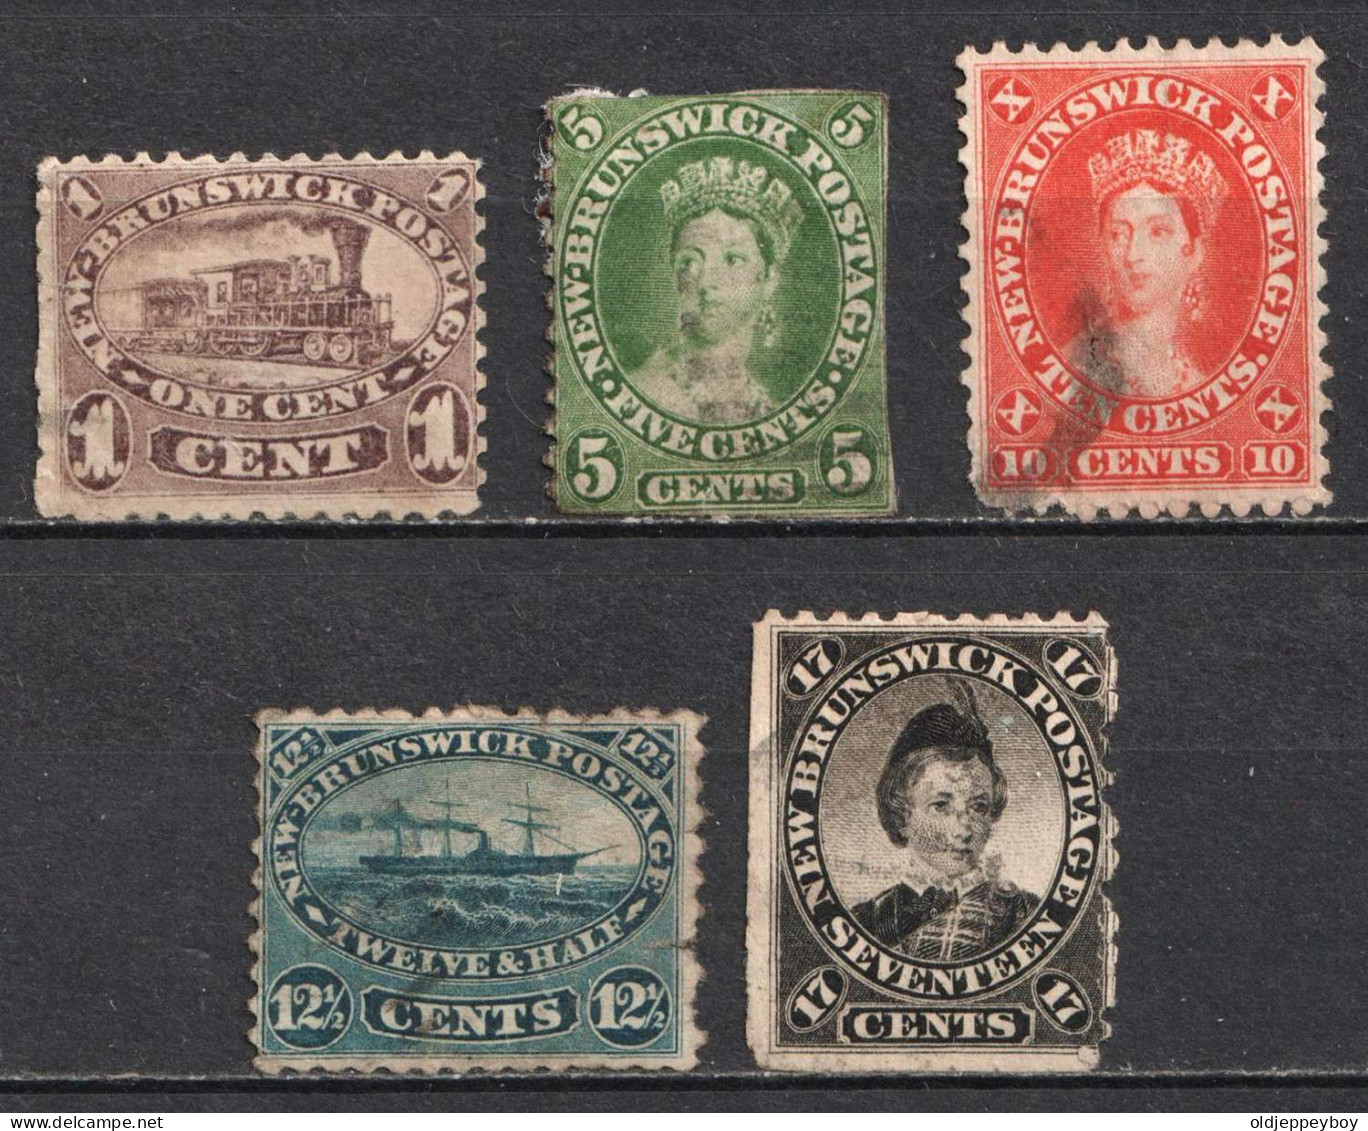 1860-63 New Brunswick, Canada, British Colonies (Mi. 4, 6 - 9, Canceled, CV $290) - Neufs